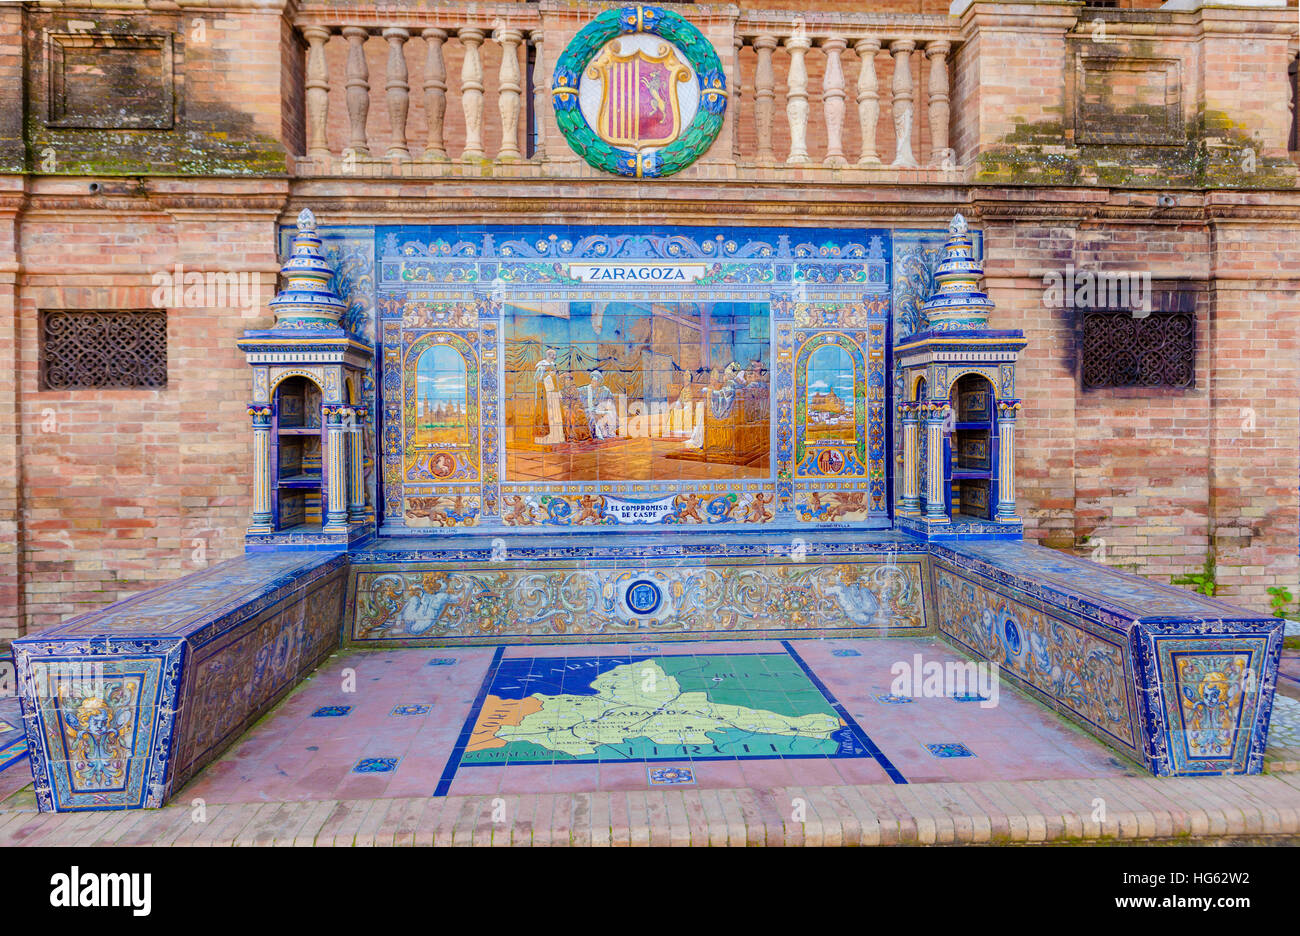 Glazed tiles bench of spanish province of Zaragoza at Plaza de Espana, Seville, Spain Stock Photo